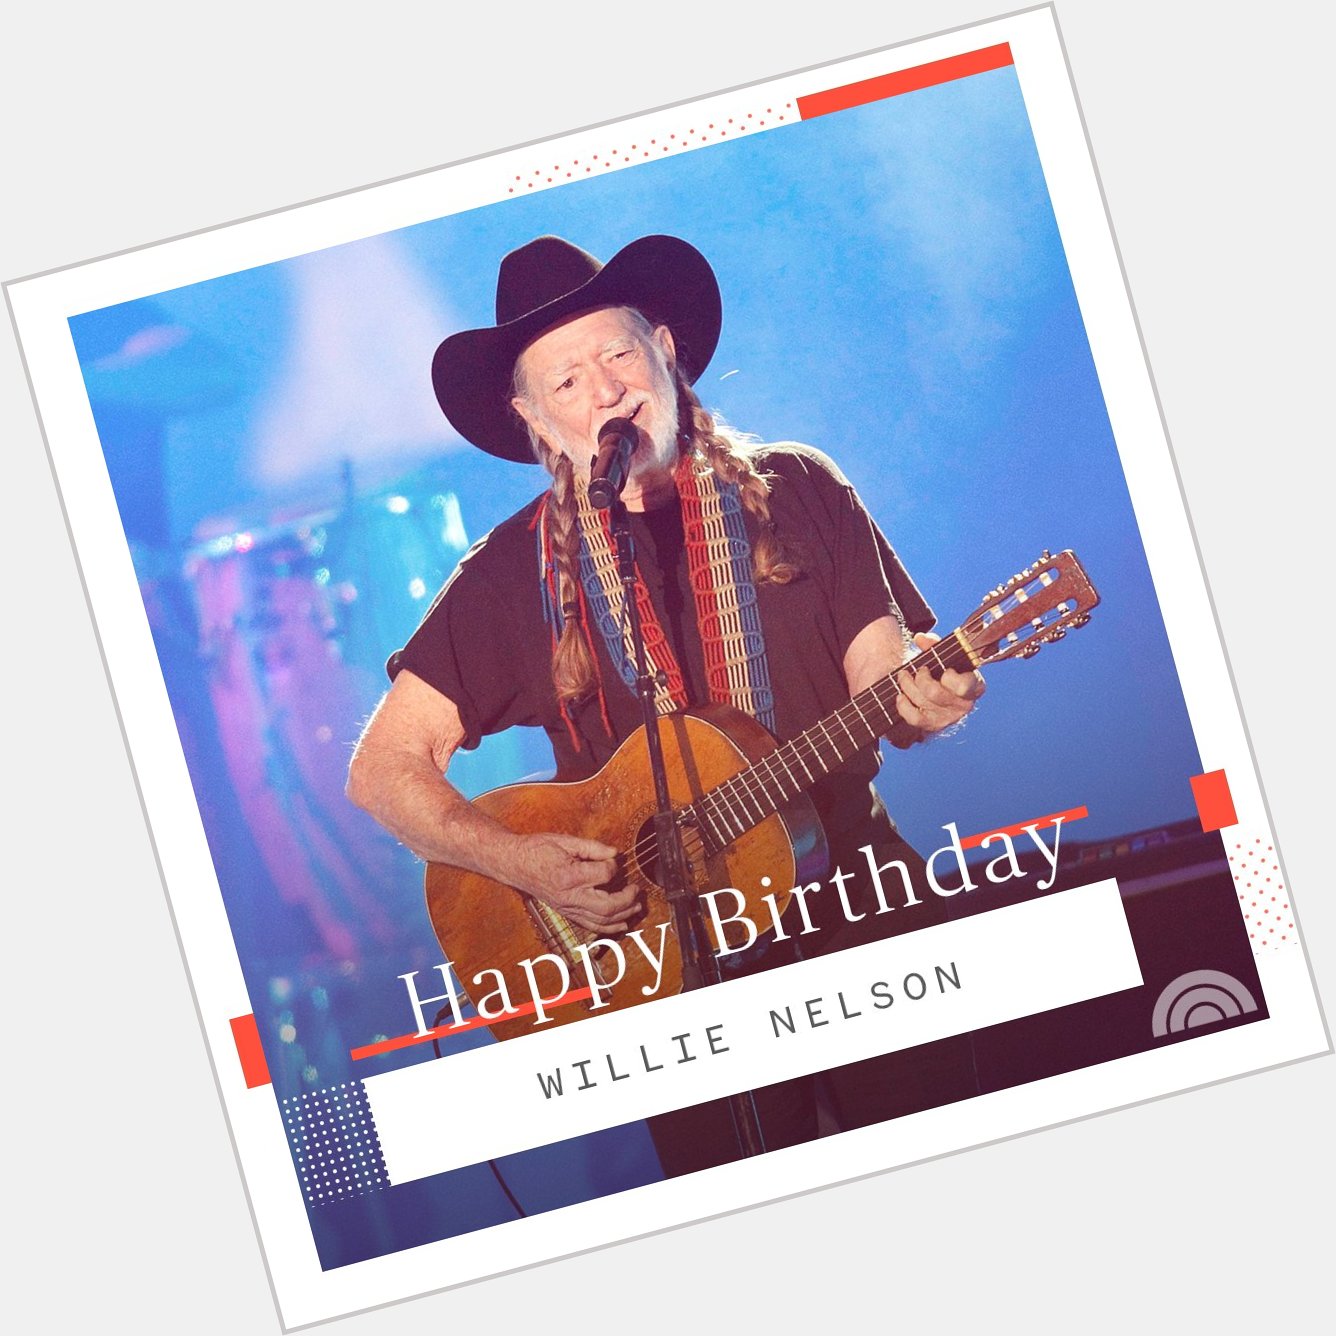 Happy birthday, Willie Nelson!  